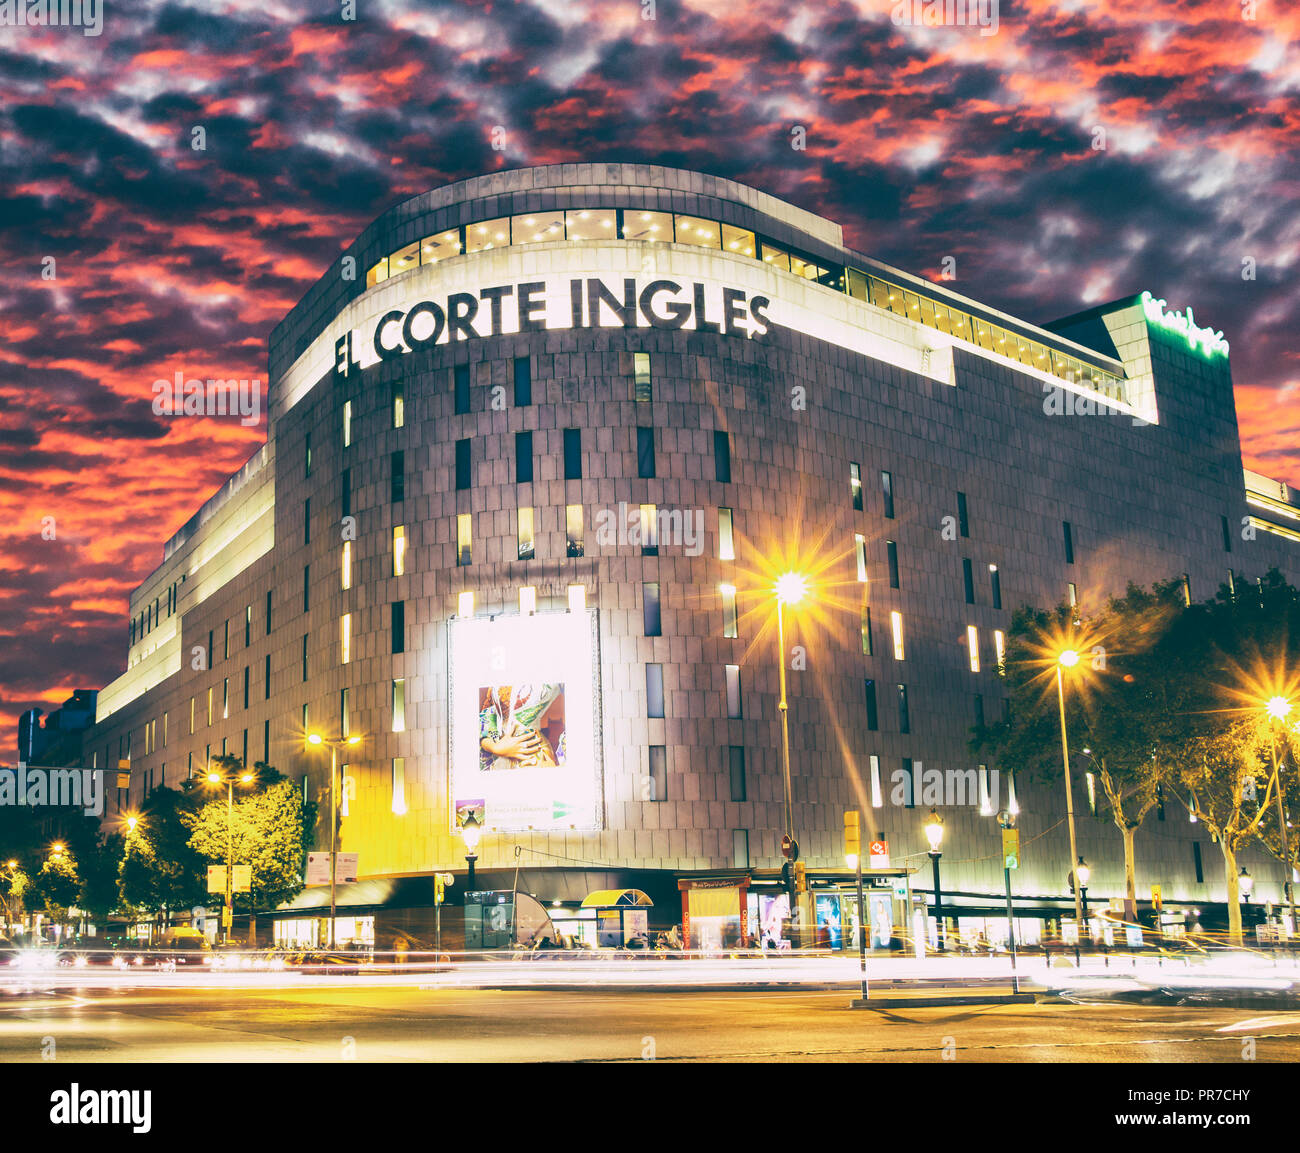 El Corte Ingles department store in Barcelona, Spain Stock Photo - Alamy